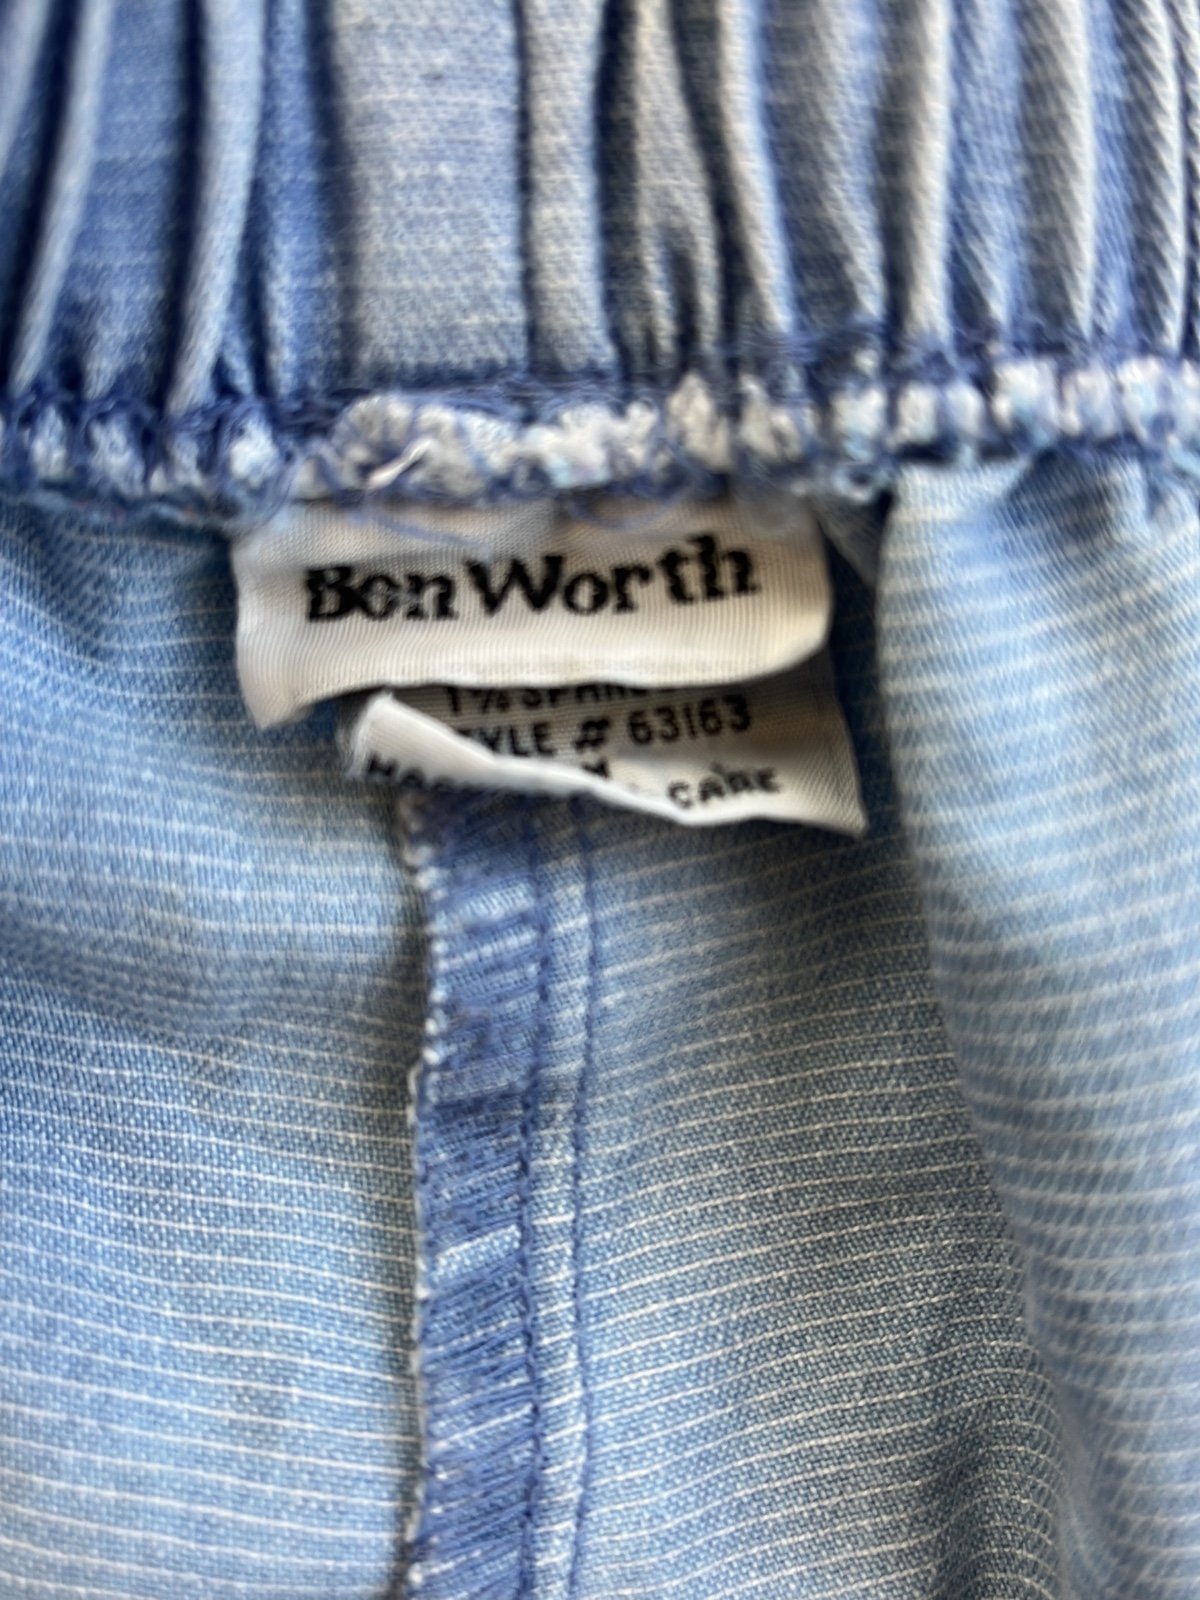 Fashion Bon worth jean Shorts n82-26 fKeXy1tvu Factory Price